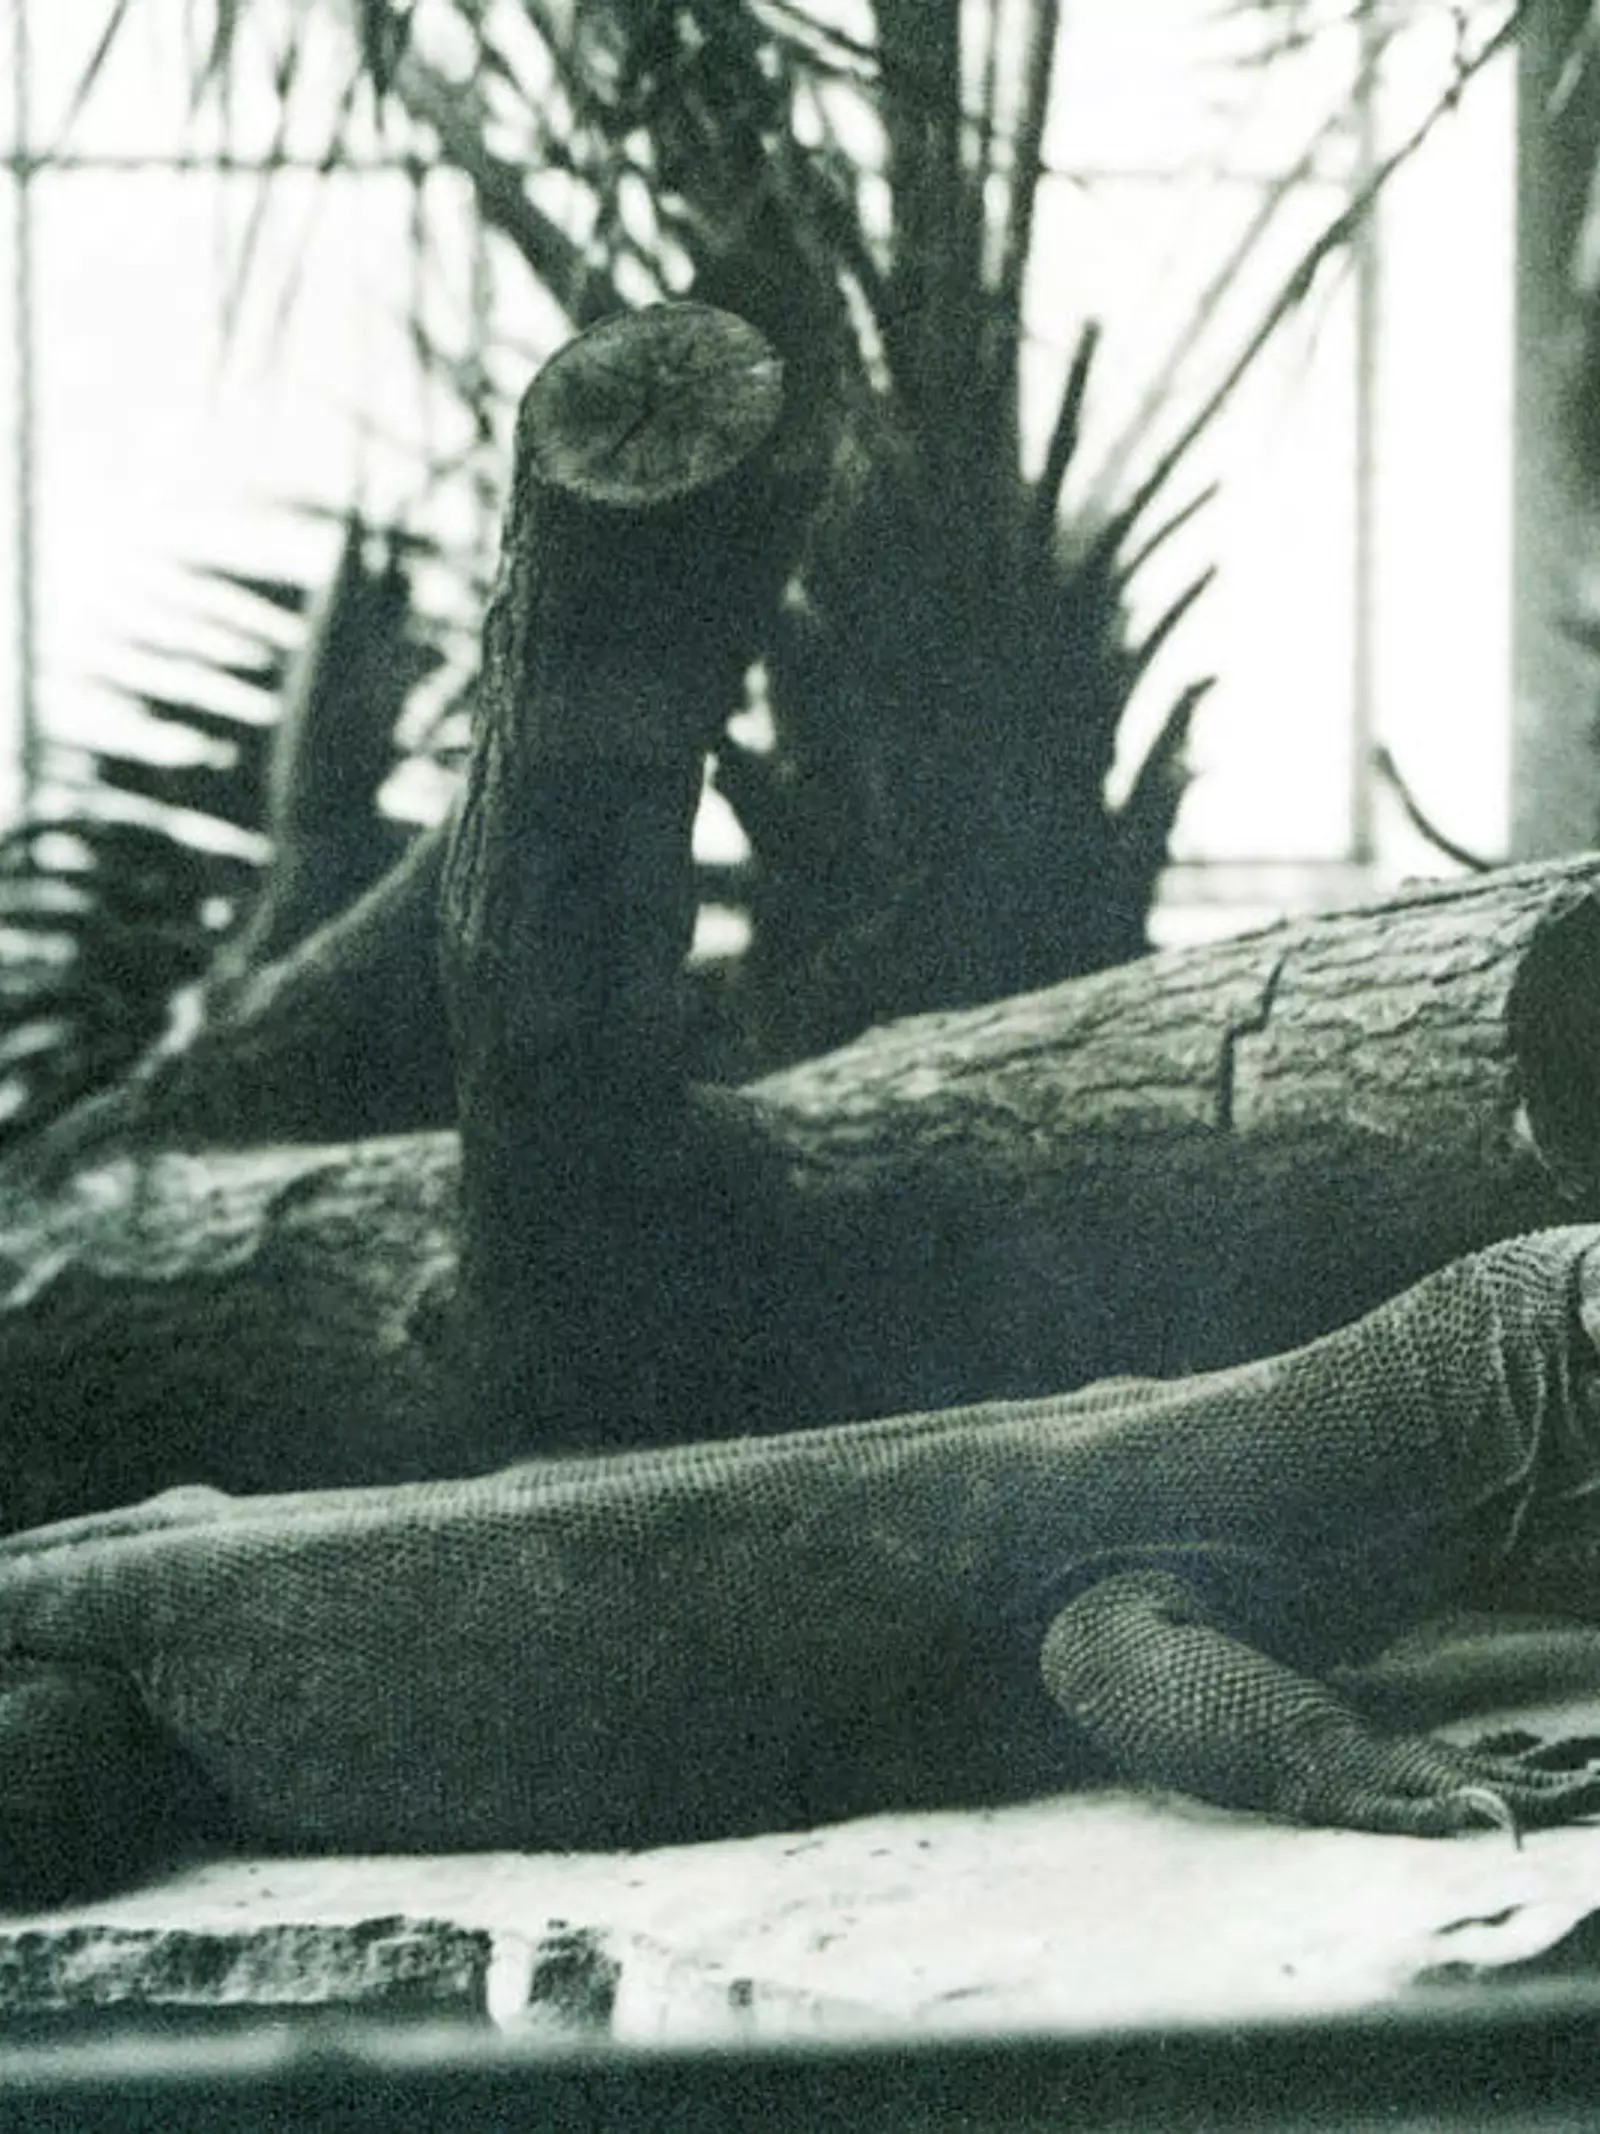 Komodo dragon at London Zoo Reptile House in 1928